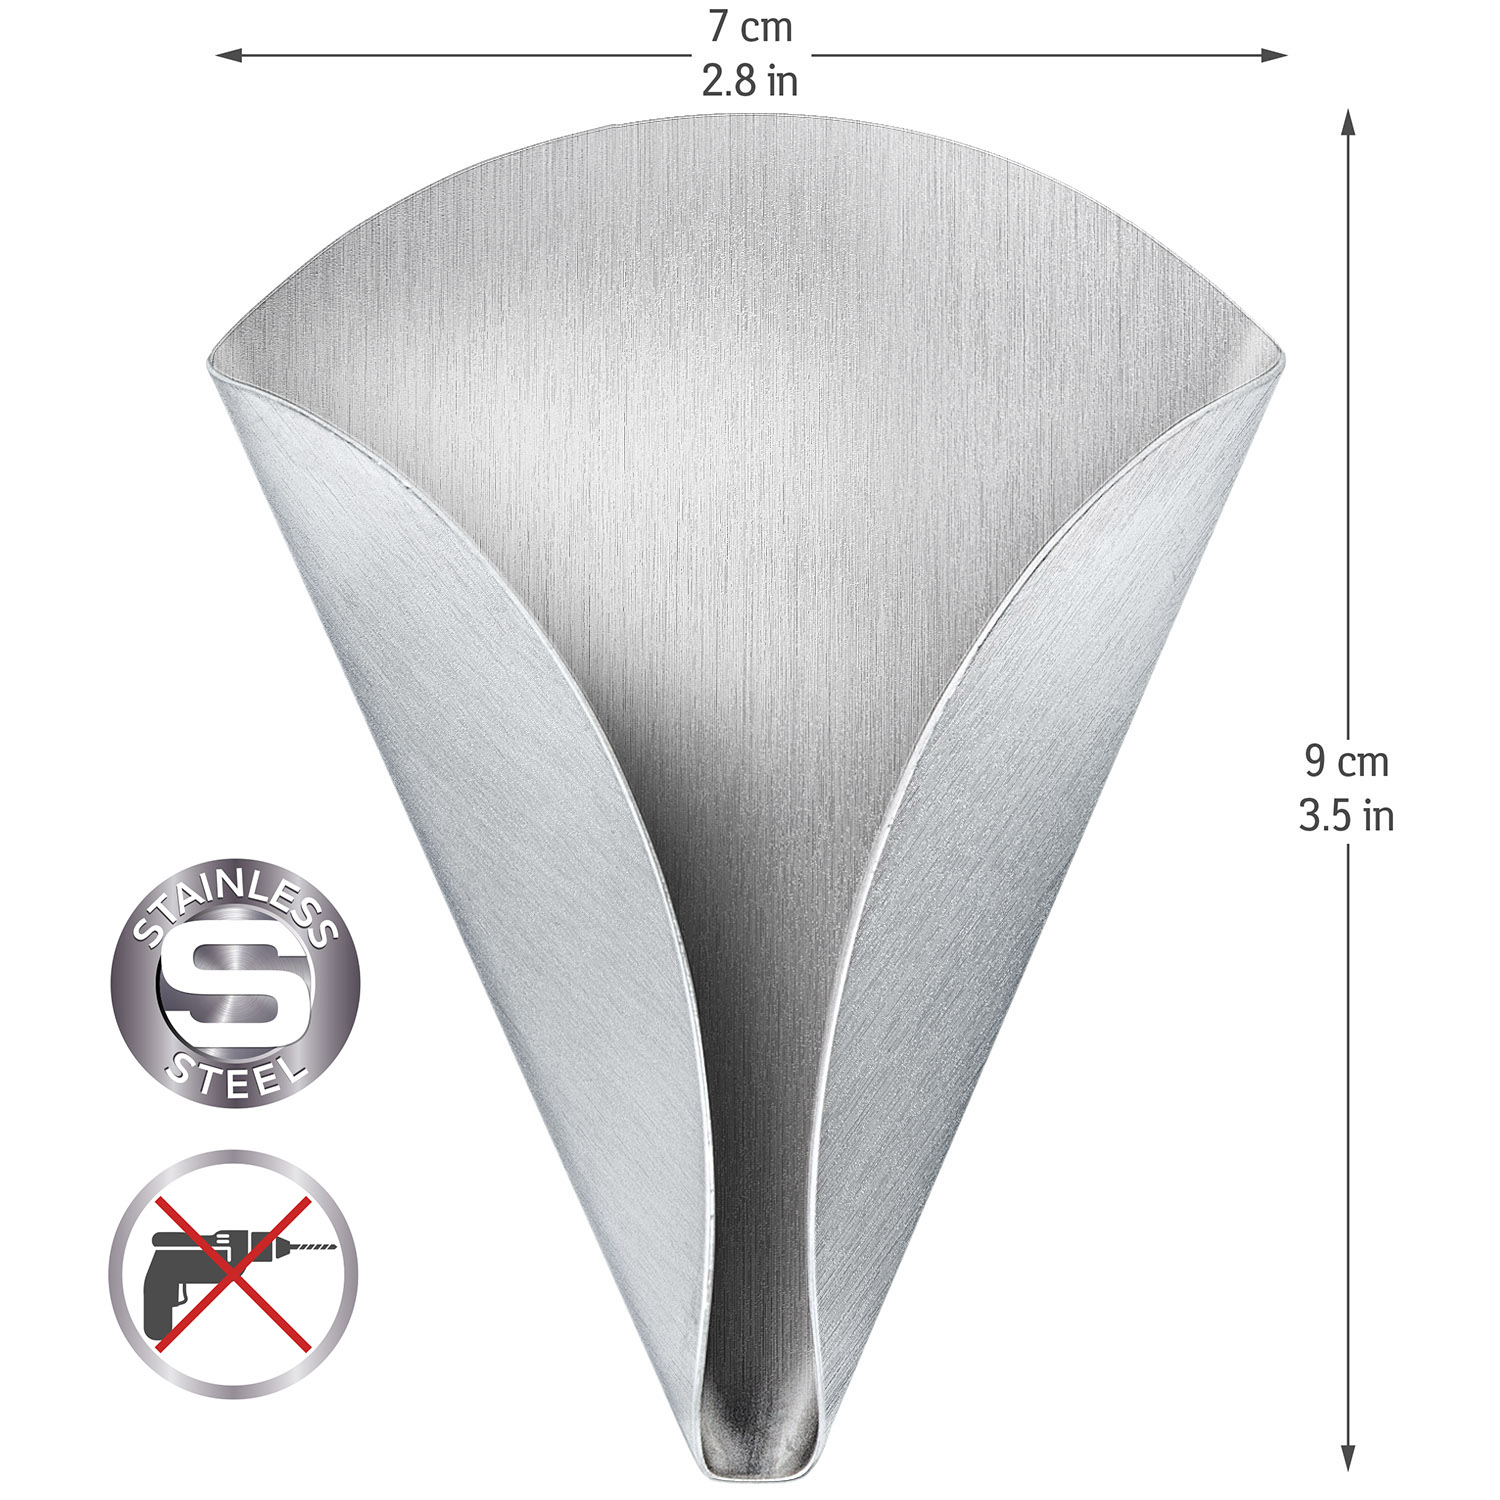 Stainless Steel Tatkraft Eva 4 Pack Adhesive Towel Holder Up to 2 kg 